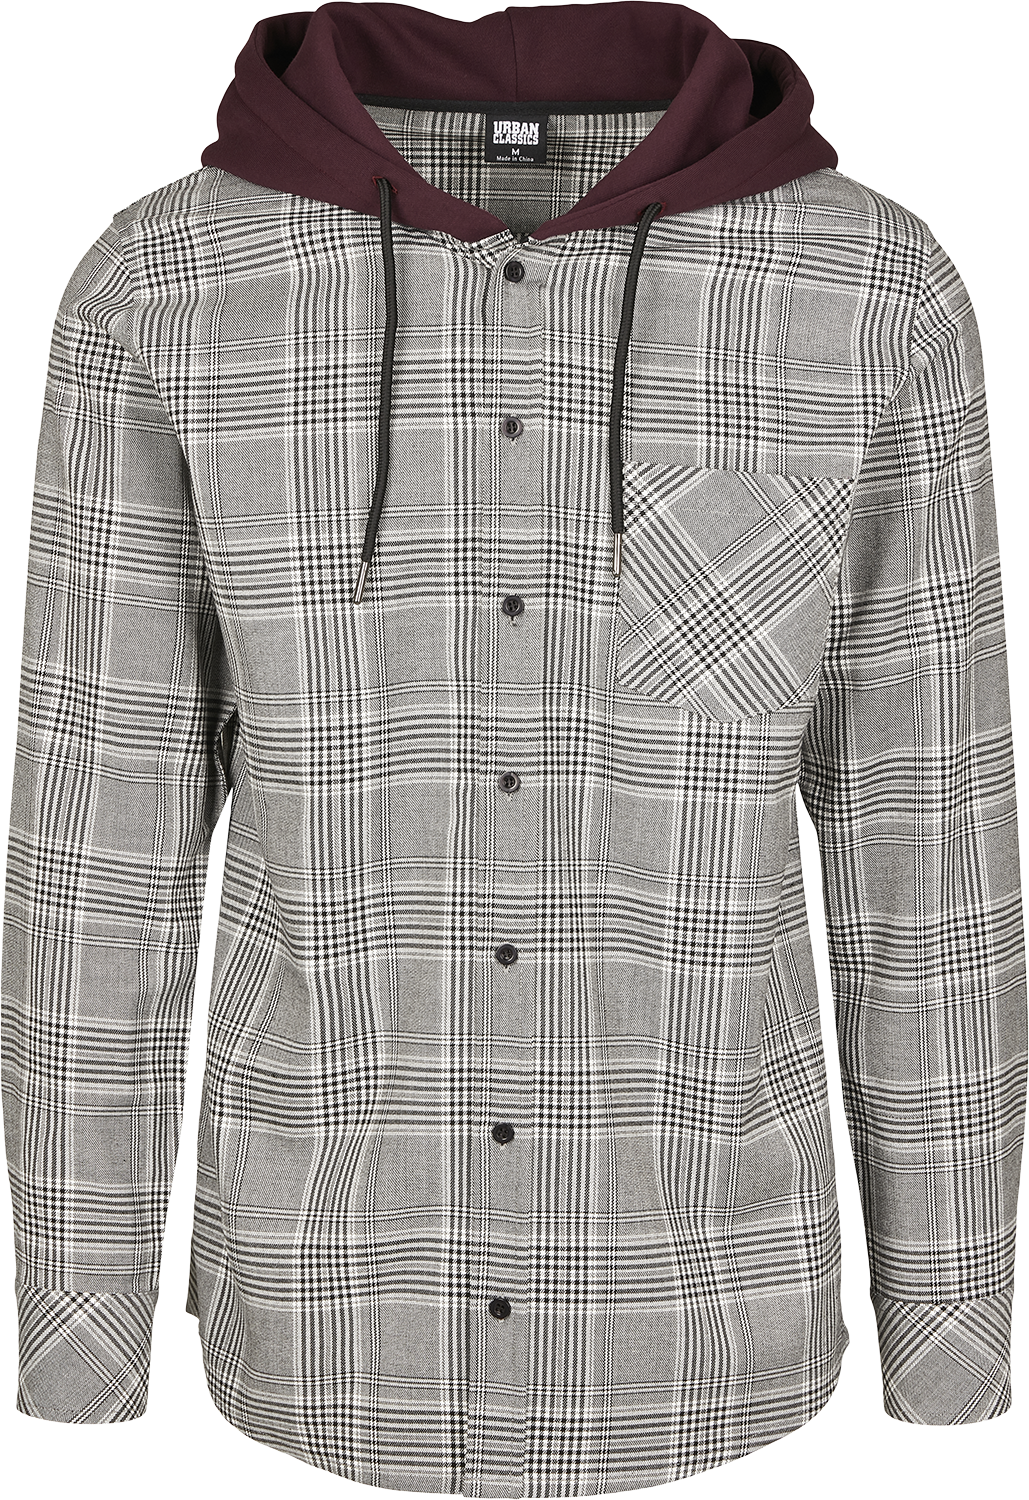 Urban Classics - Hooded Glencheck Shirt - Shirt - grey/bordeaux image